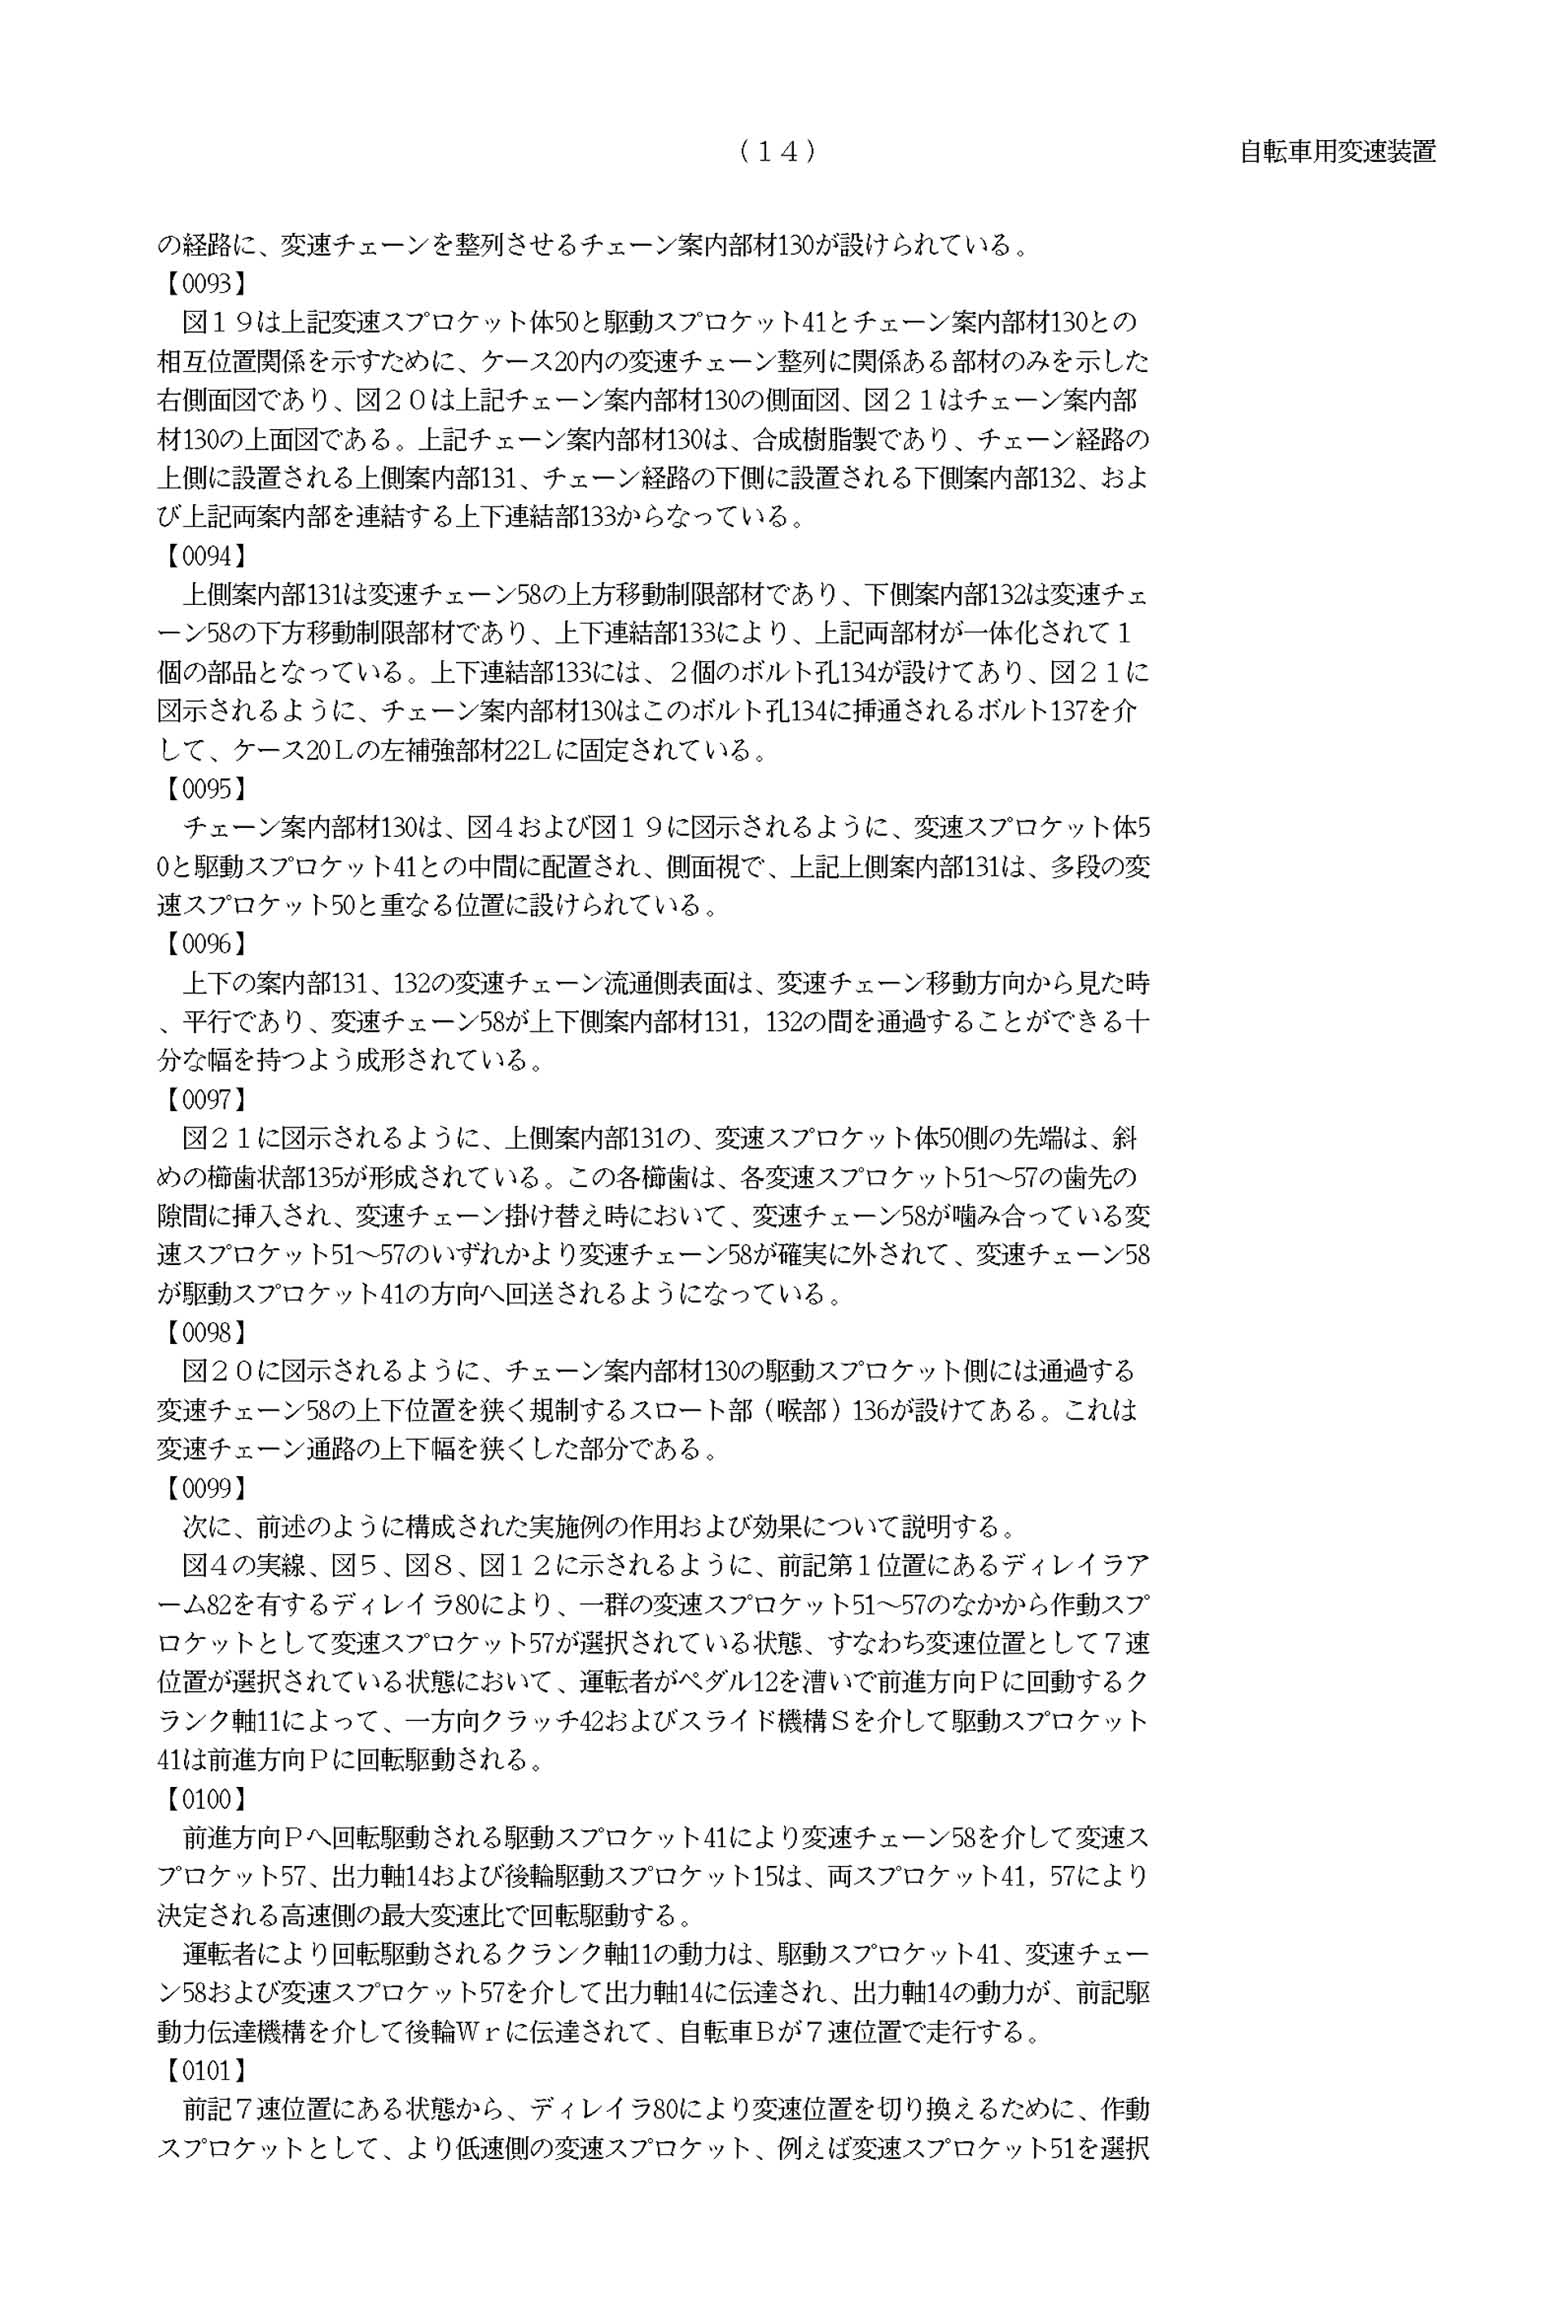 Japanese Patent 4286681 - Honda page 14 main image